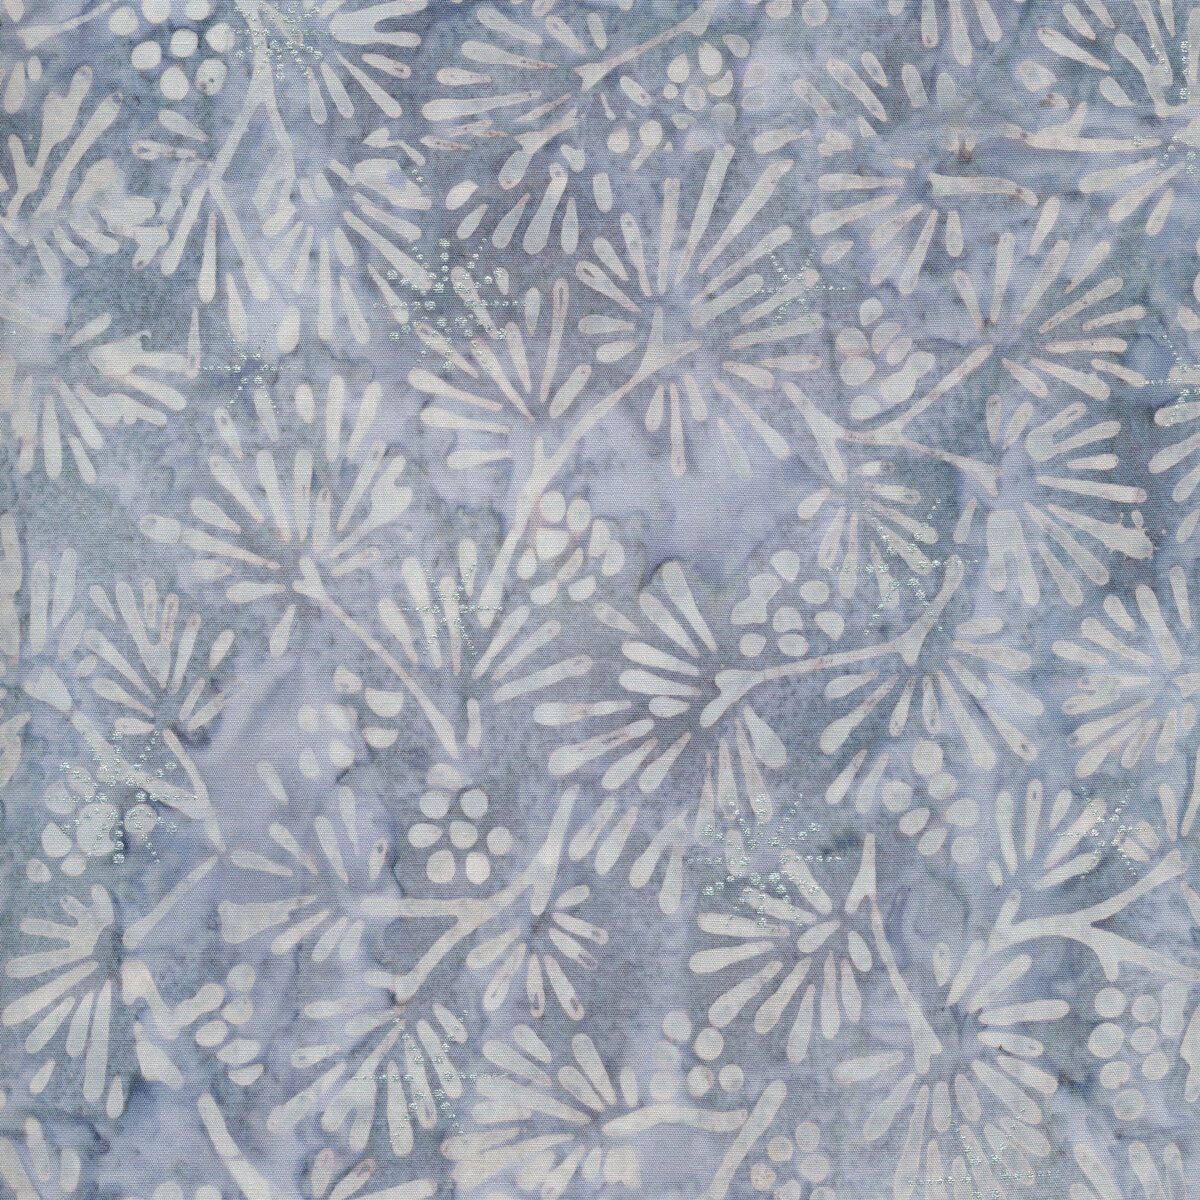 Winter Wonder Lane Gray & Silver Embroidered Snowflake Throw Pillow